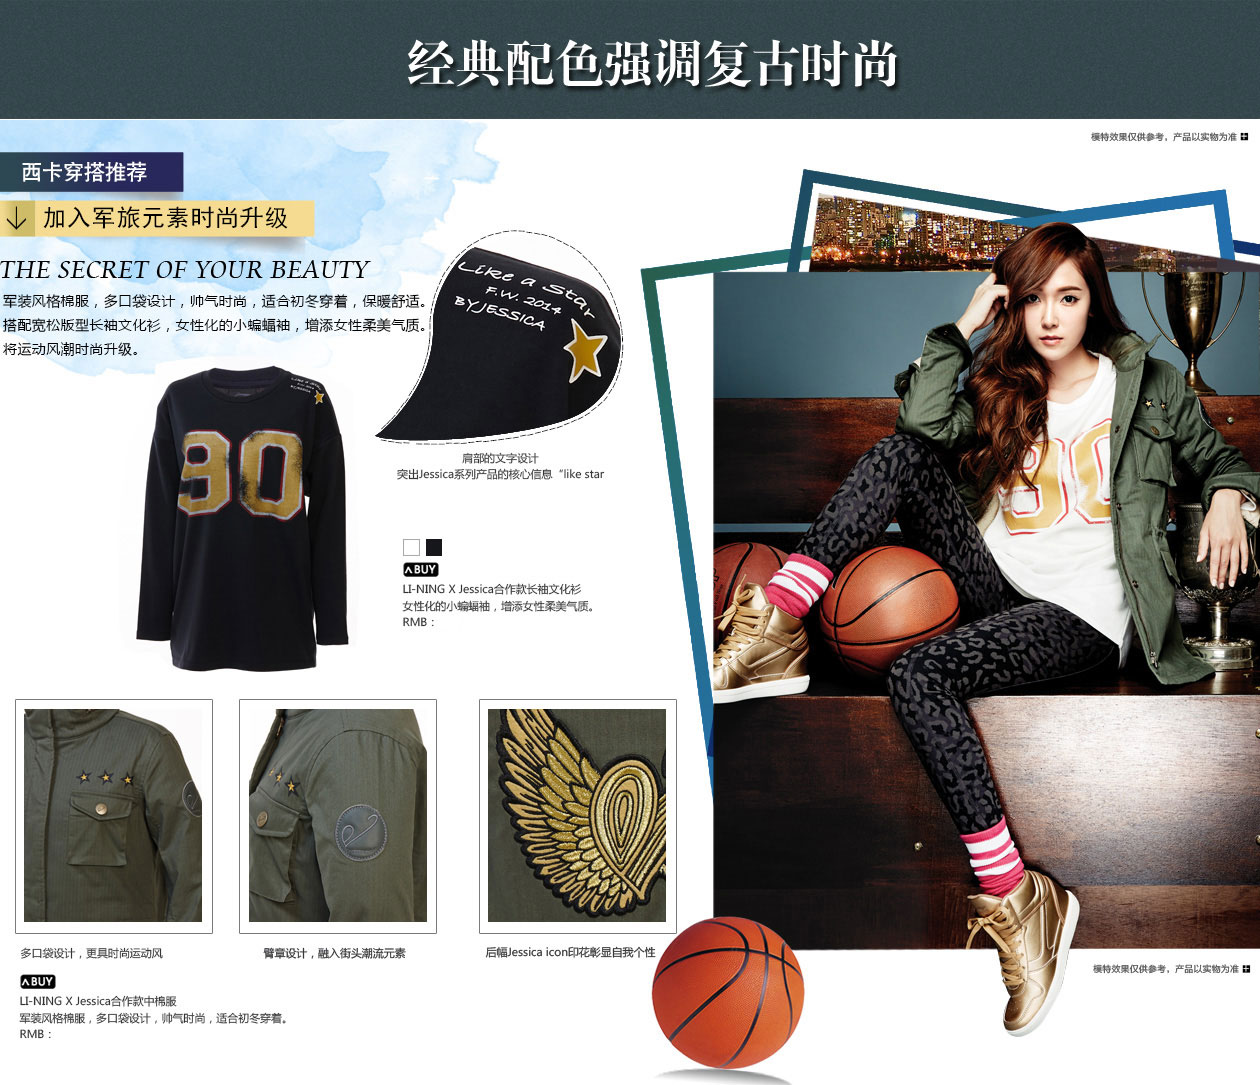 Jessica Jung Li Ning Chinese website